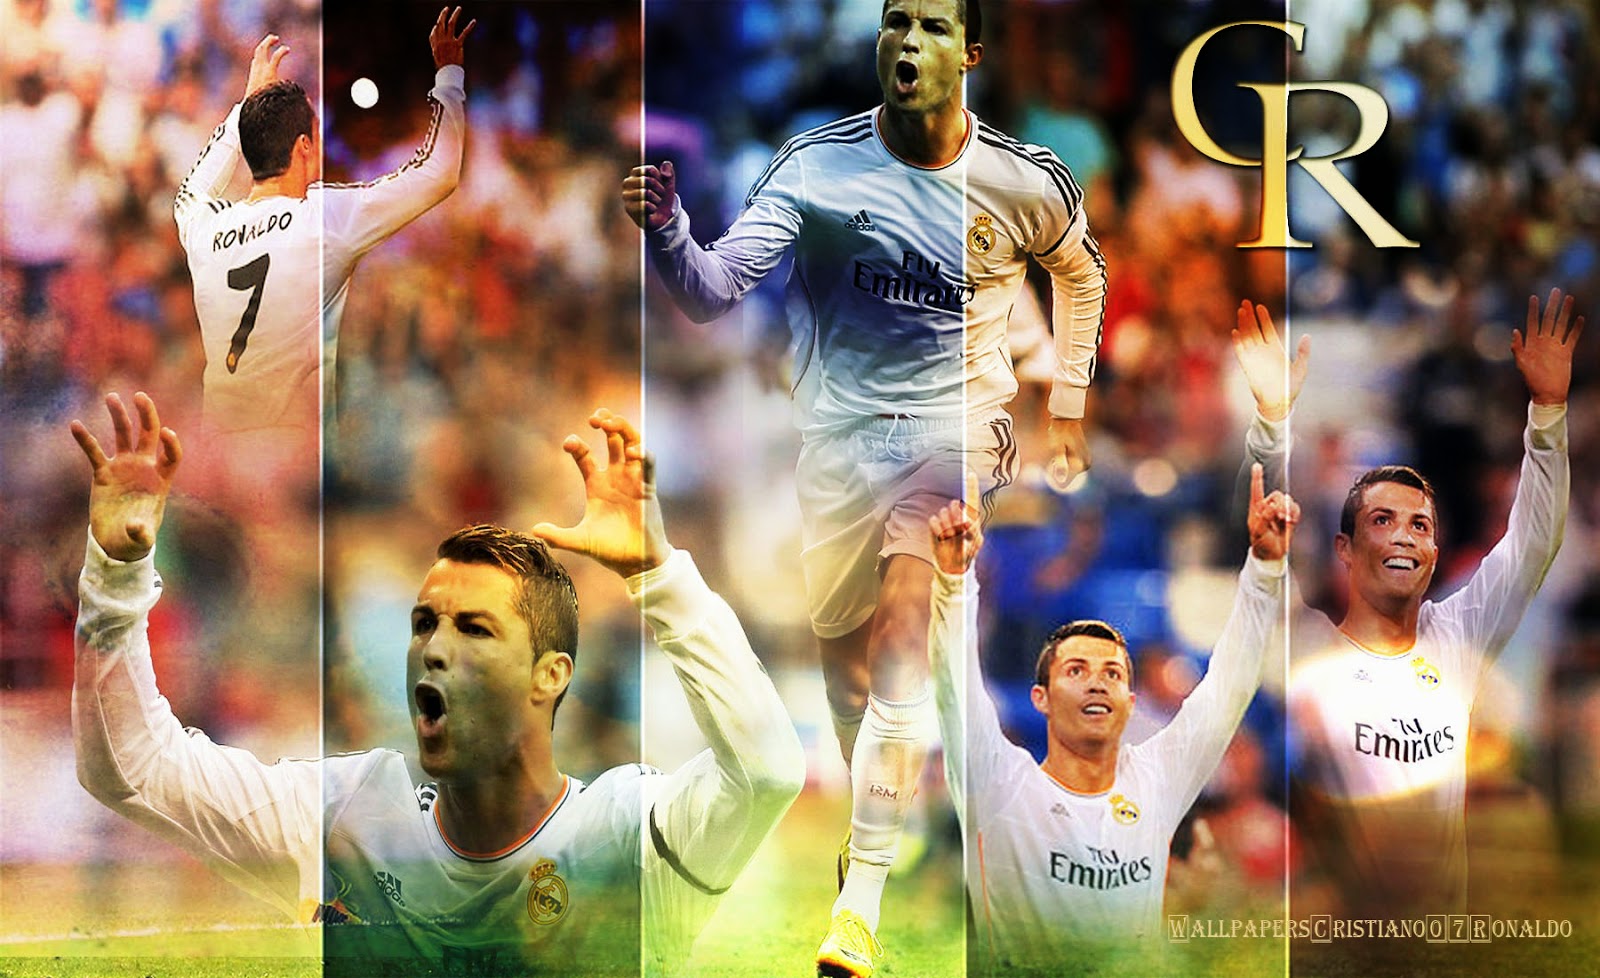 Cristiano Ronaldo Wallpapers: Cristiano Ronaldo Wallpaper HD Real Madrid